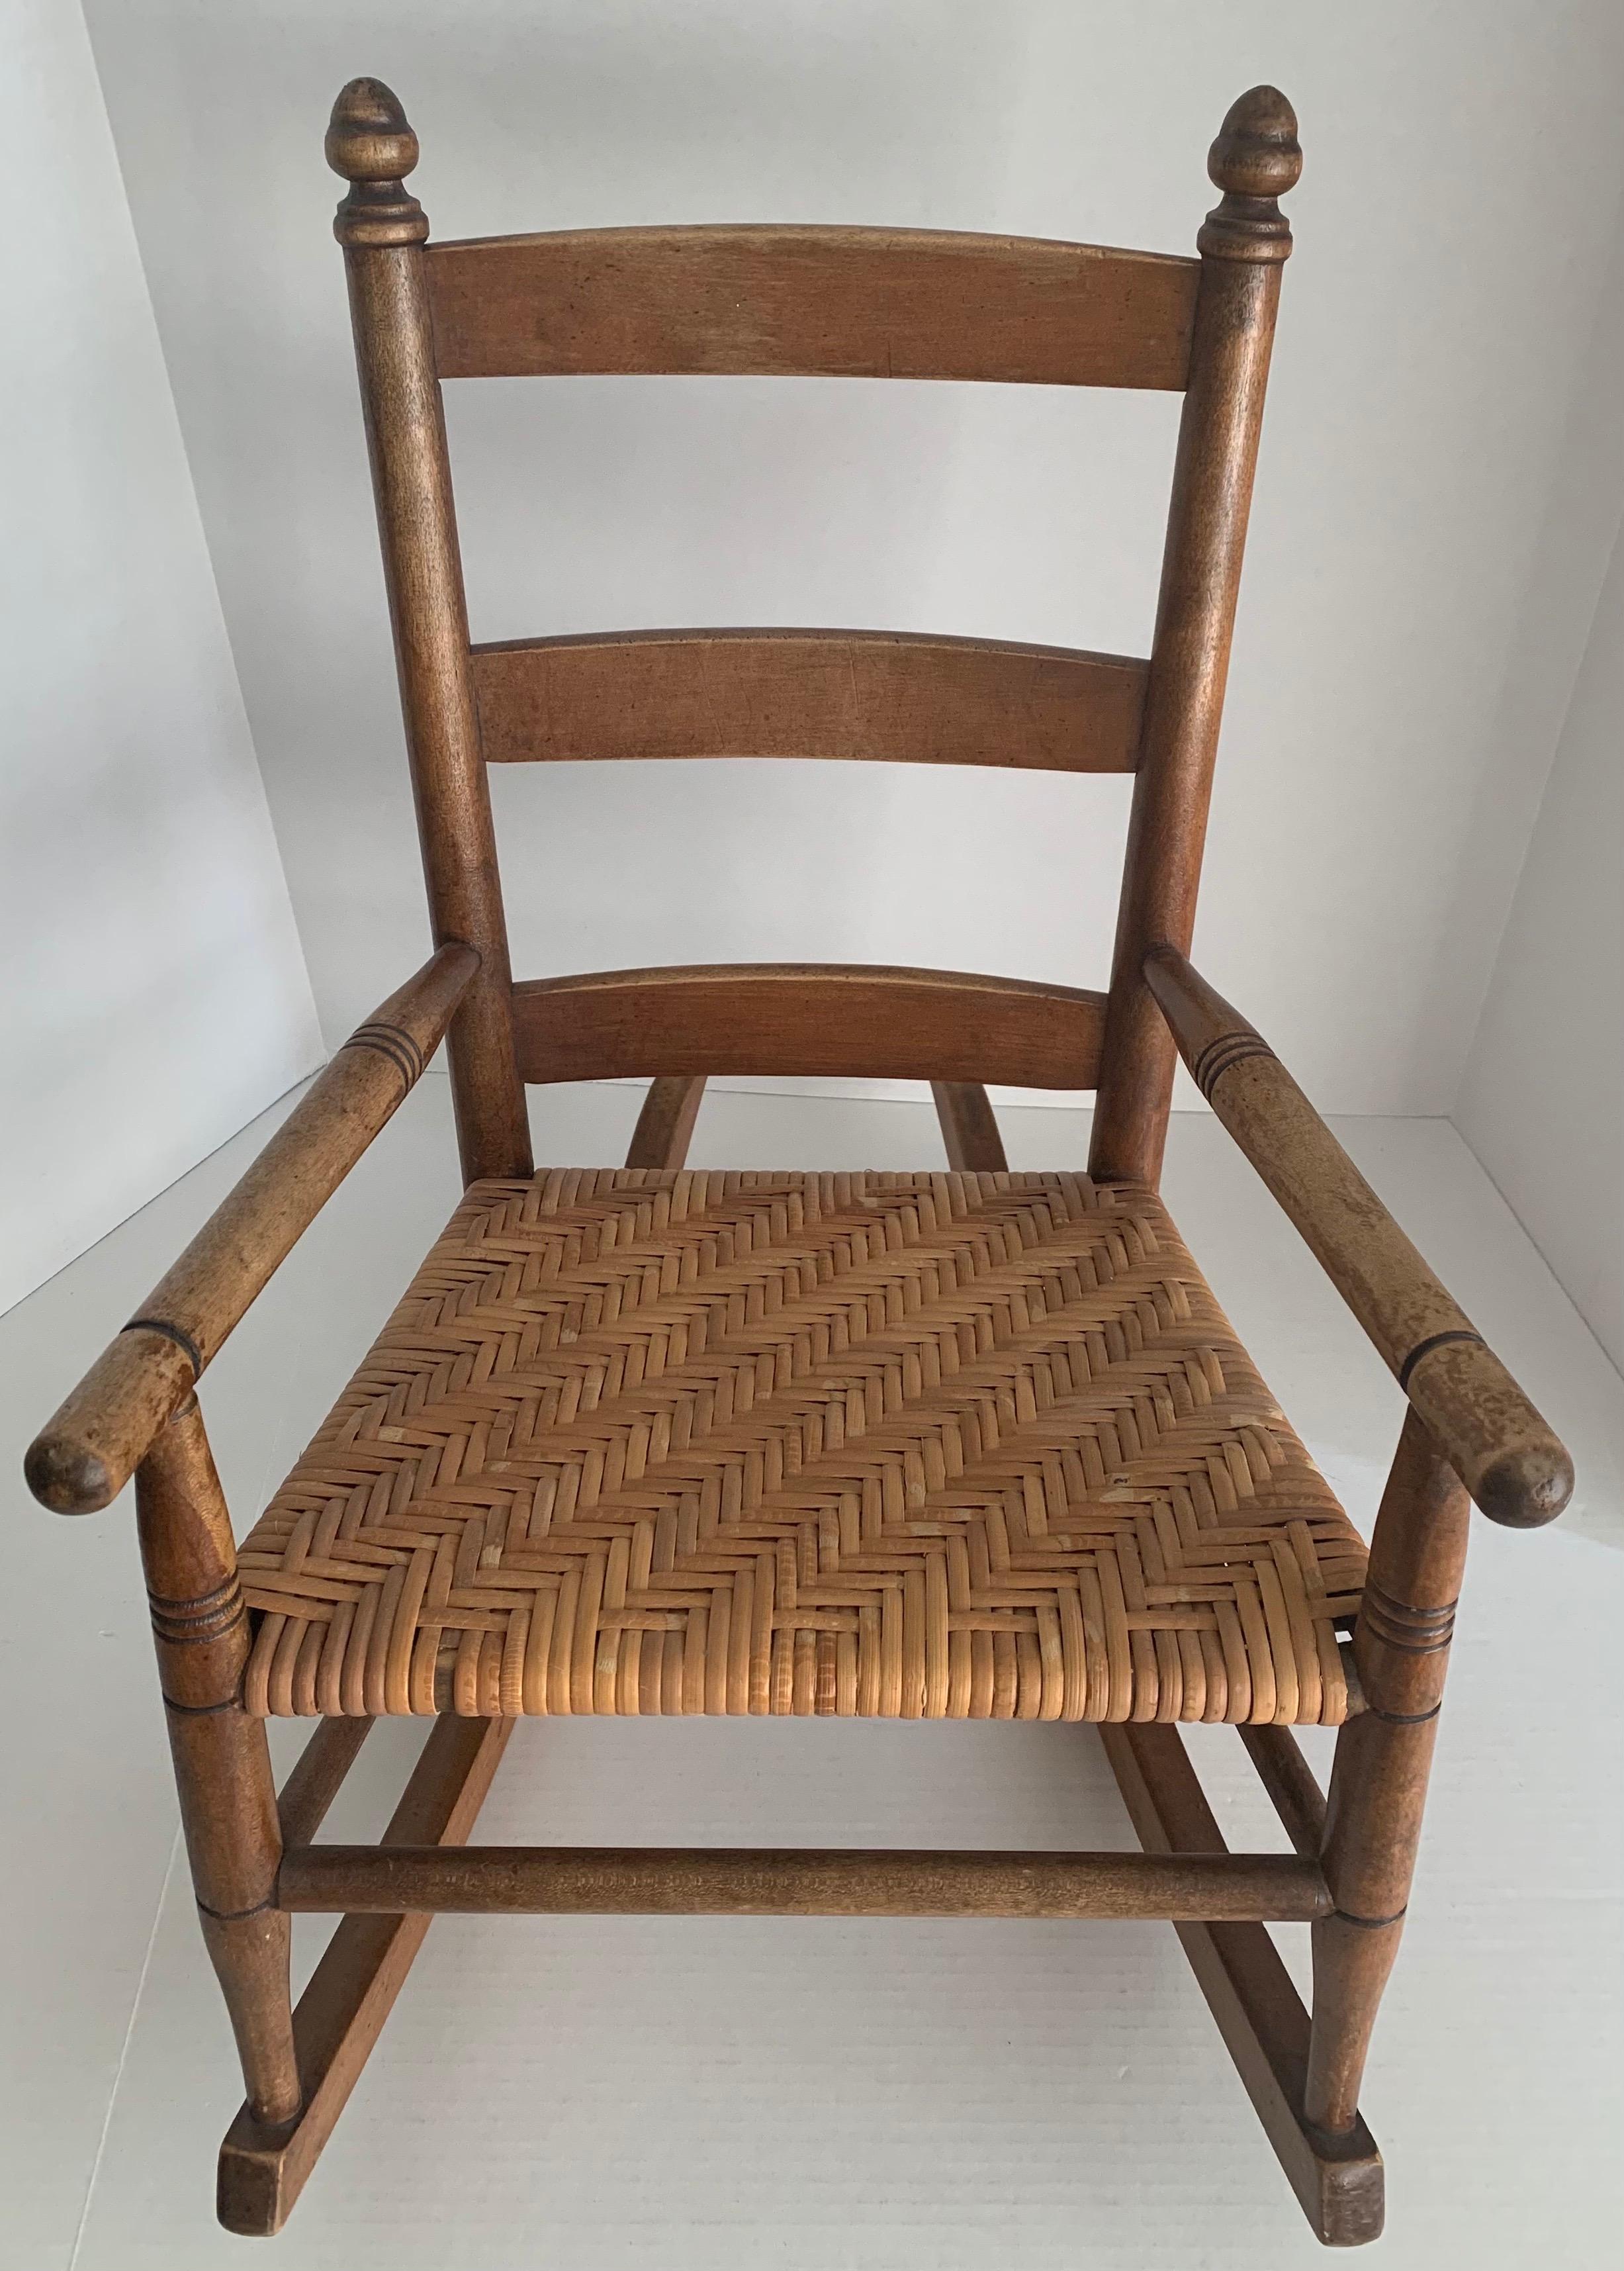 1950s rocking chair